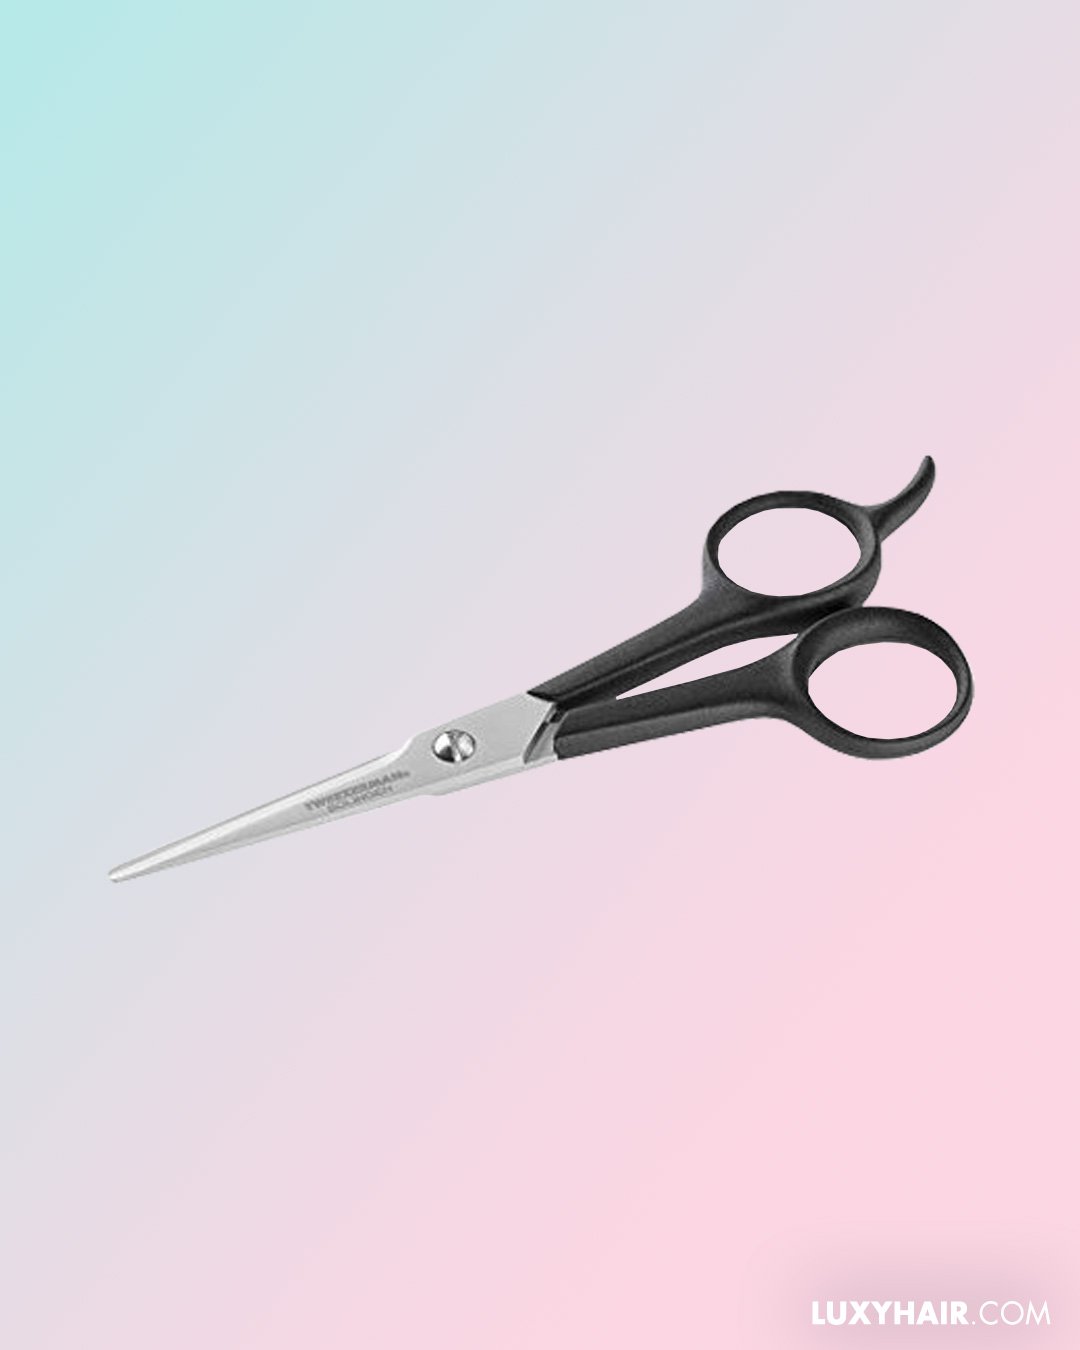 Best hair scissors